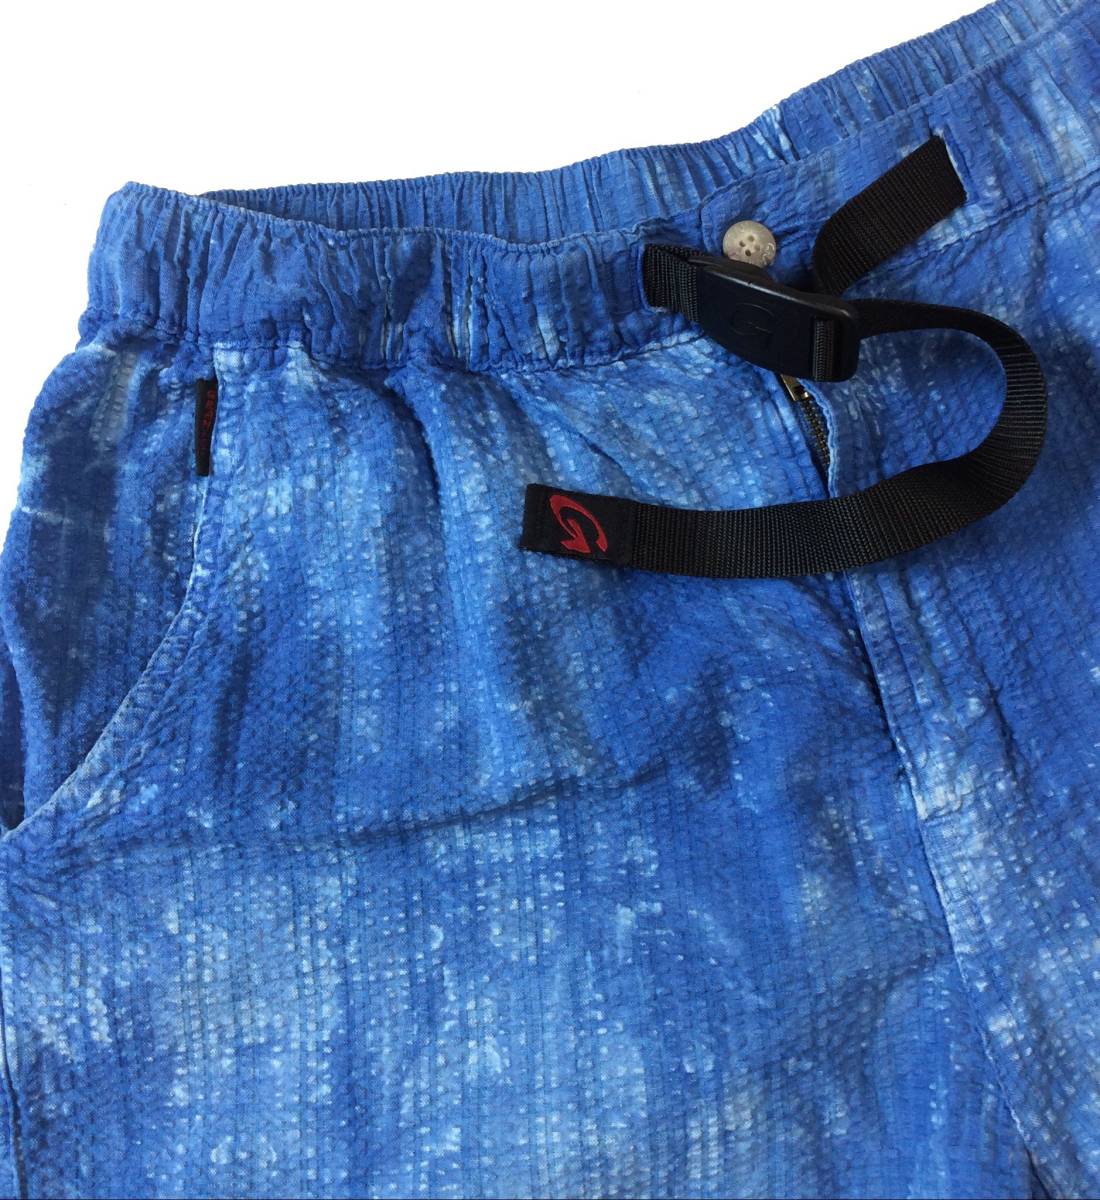 GRAMICCI Gramicci USA made sia soccer shorts short pants shorts blue Thai large cotton WOMEN*S L